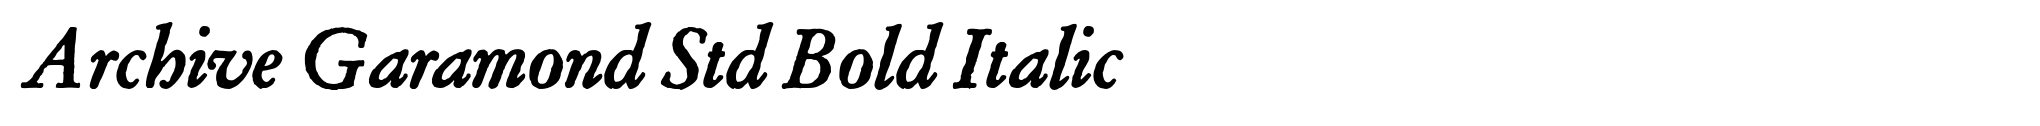 Archive Garamond Std Bold Italic image